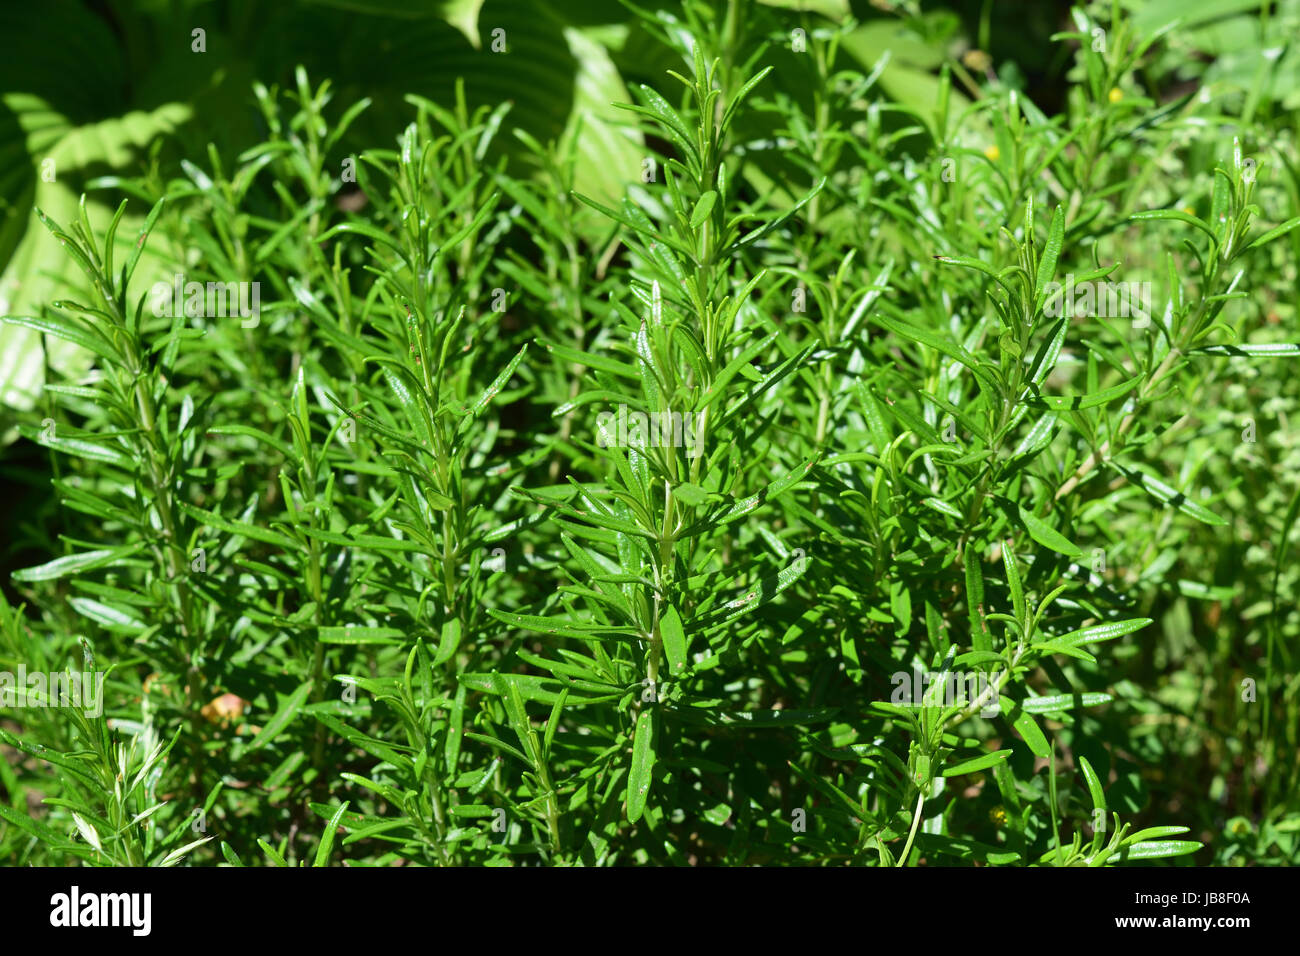 Rosemary bush in the garden Stock Photo